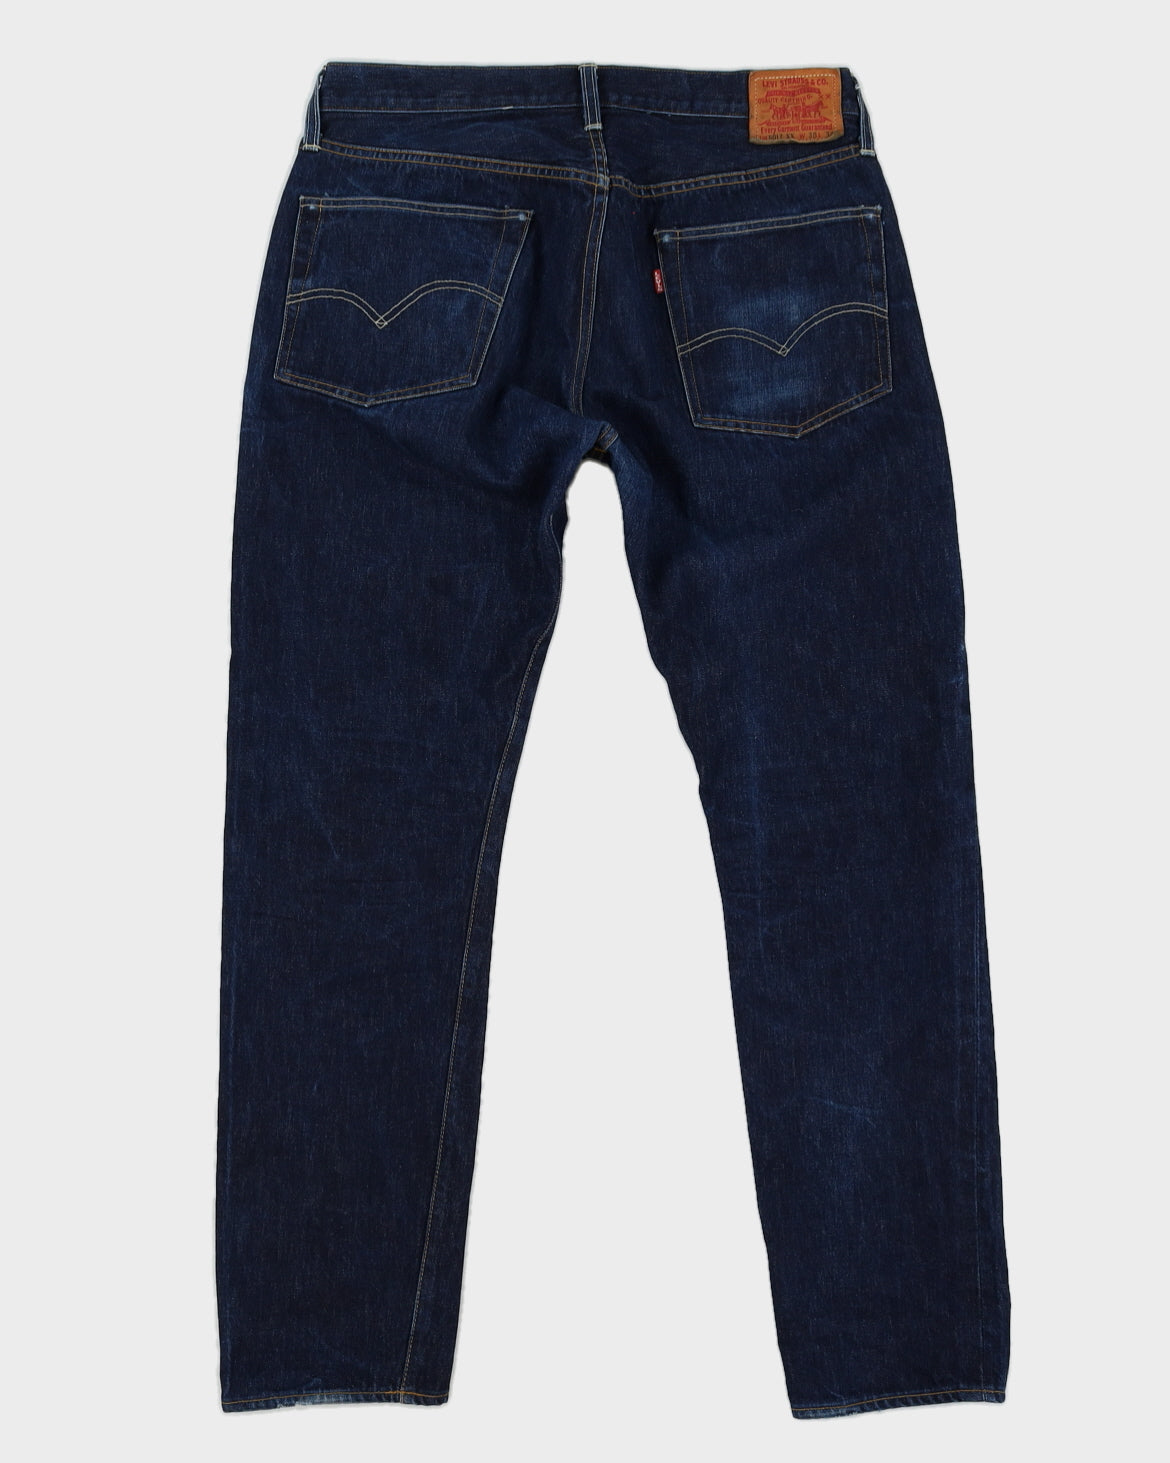 Levi's 501 Big E Repro Selvedge Blue Jeans - W35 L32